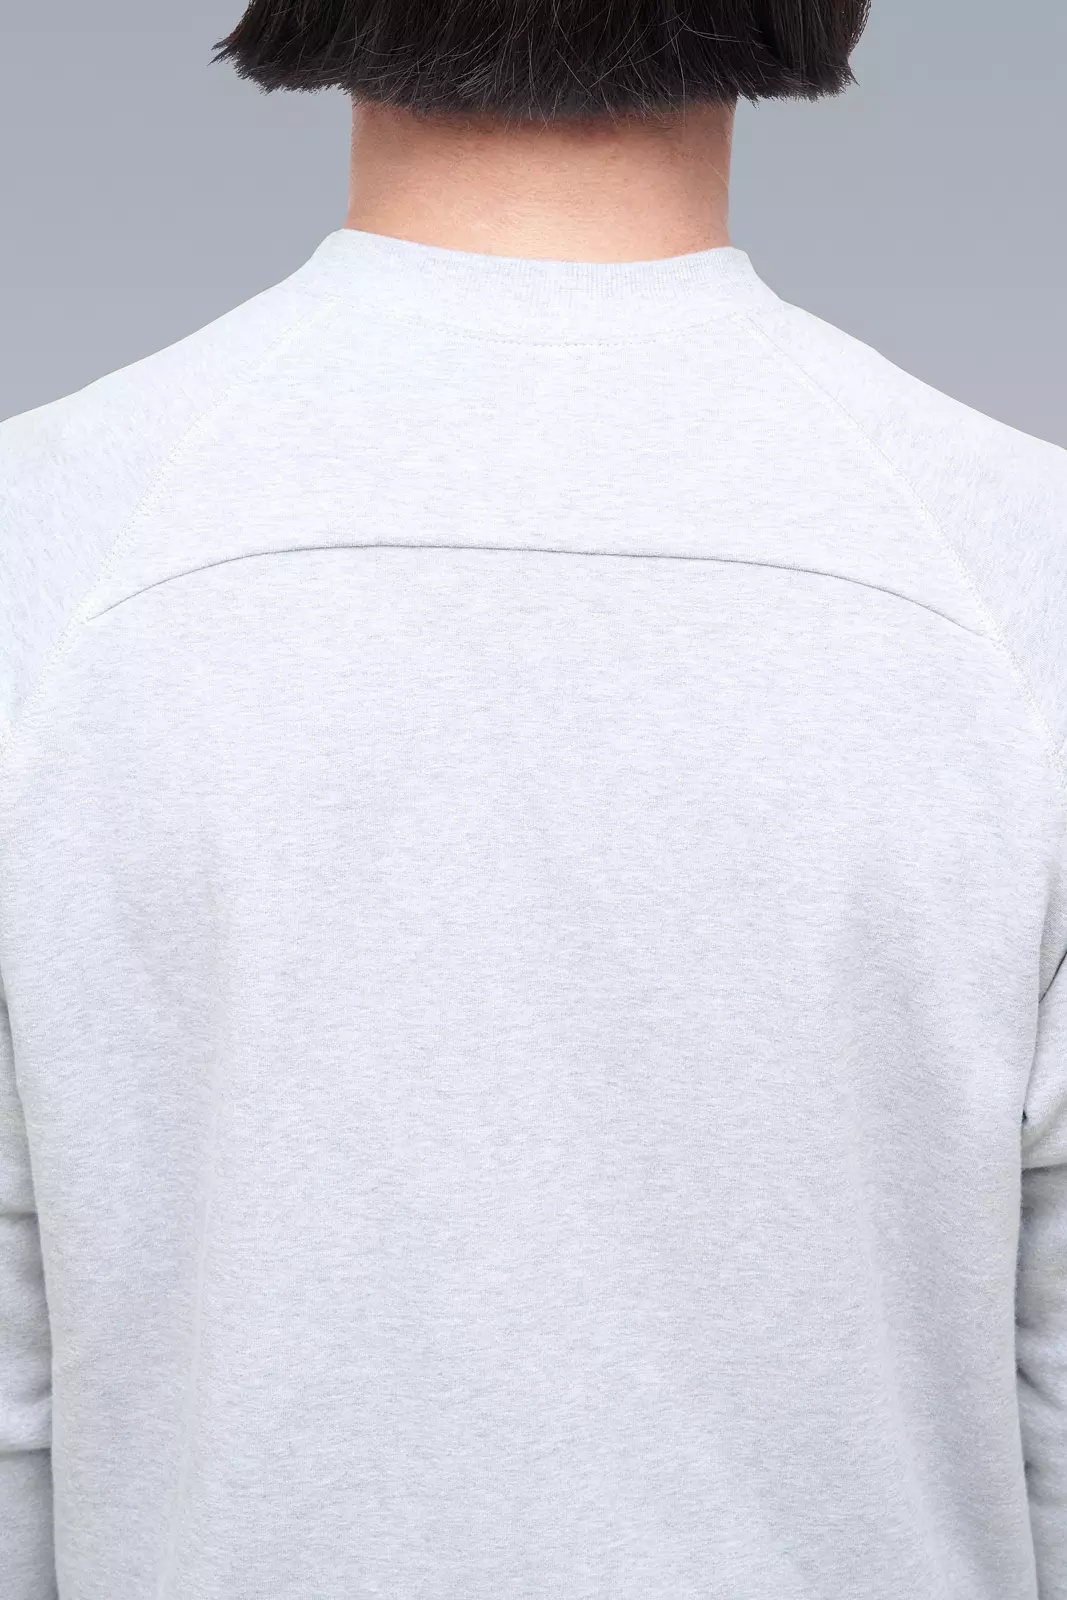 S14-BR Cotton Crewneck Sweatshirt Gray Melange - 12